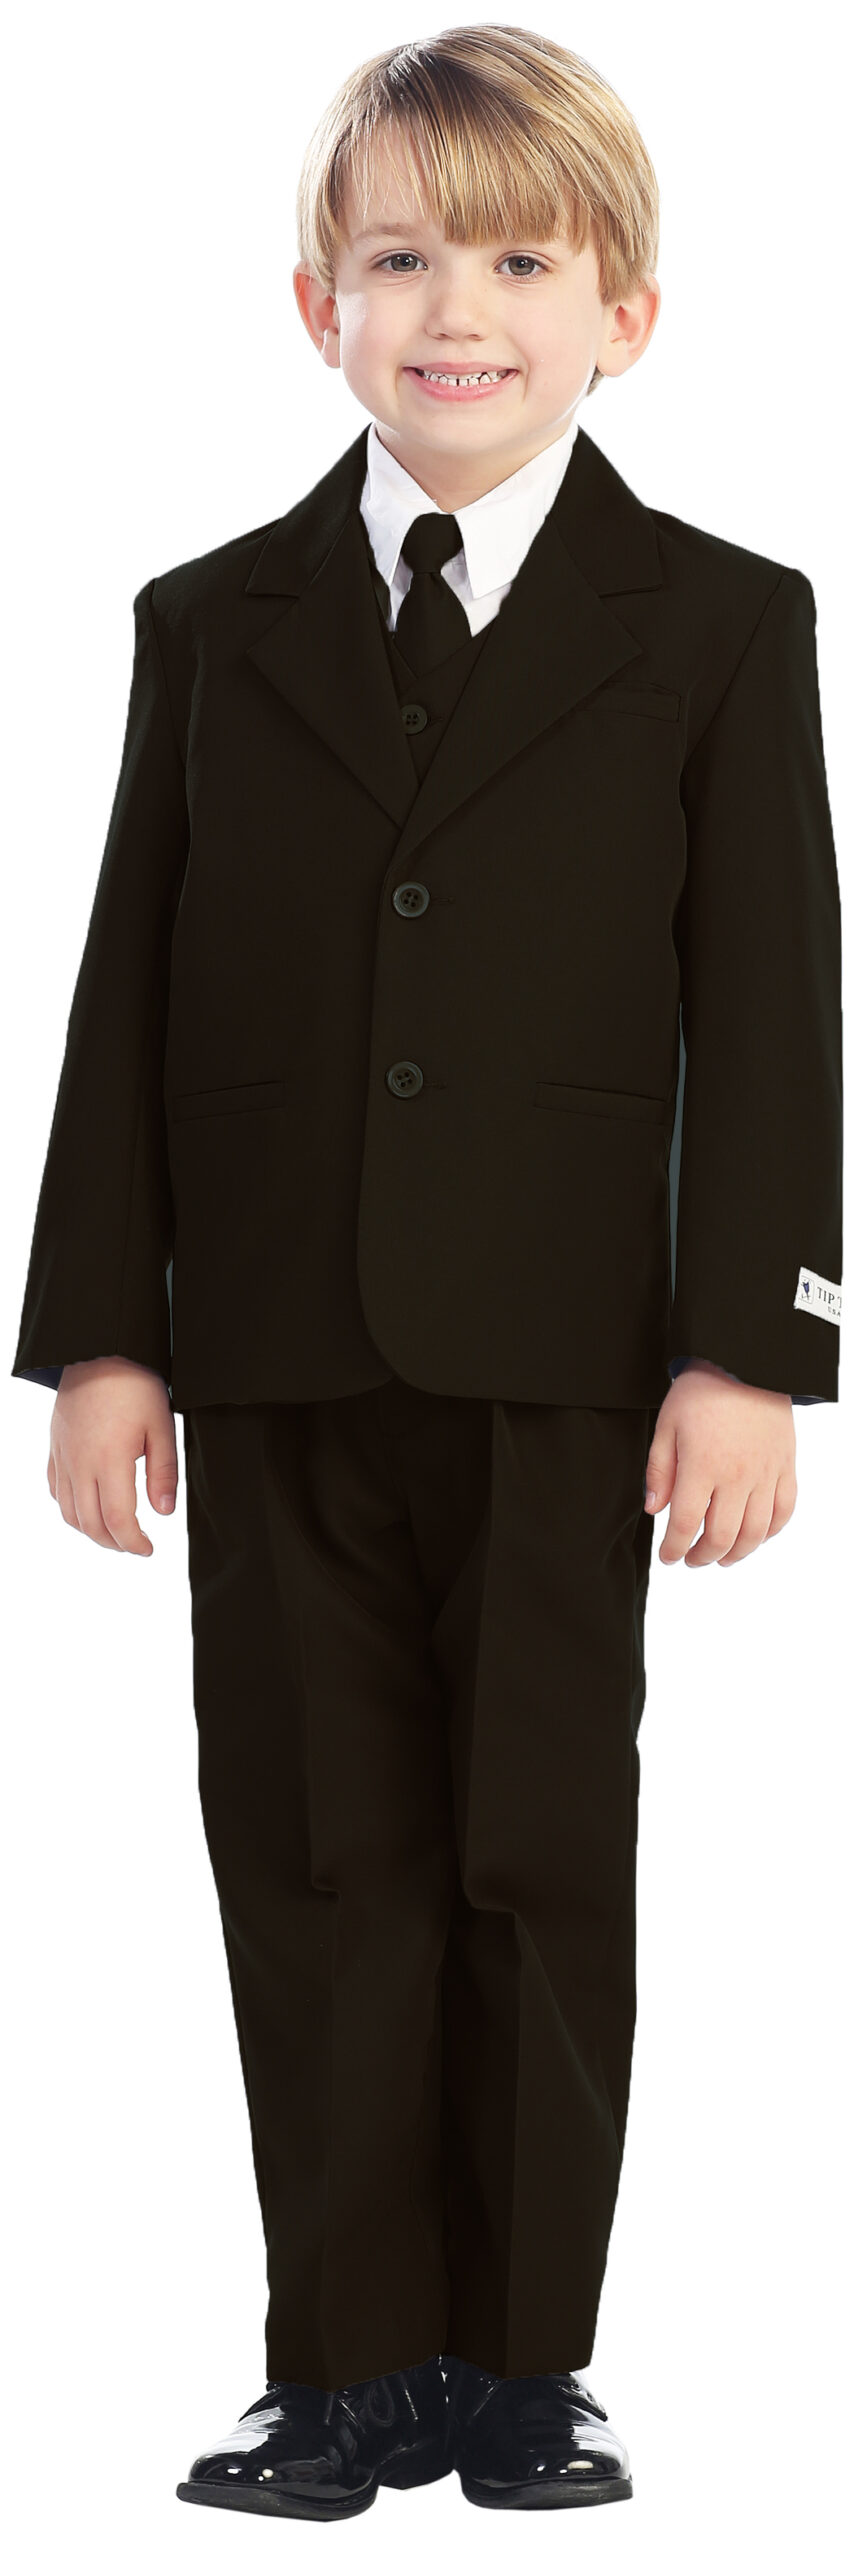 Avery Hill 5-Piece Boy's 2-Button Dress Suit Full-Back Vest - Brown Size 16